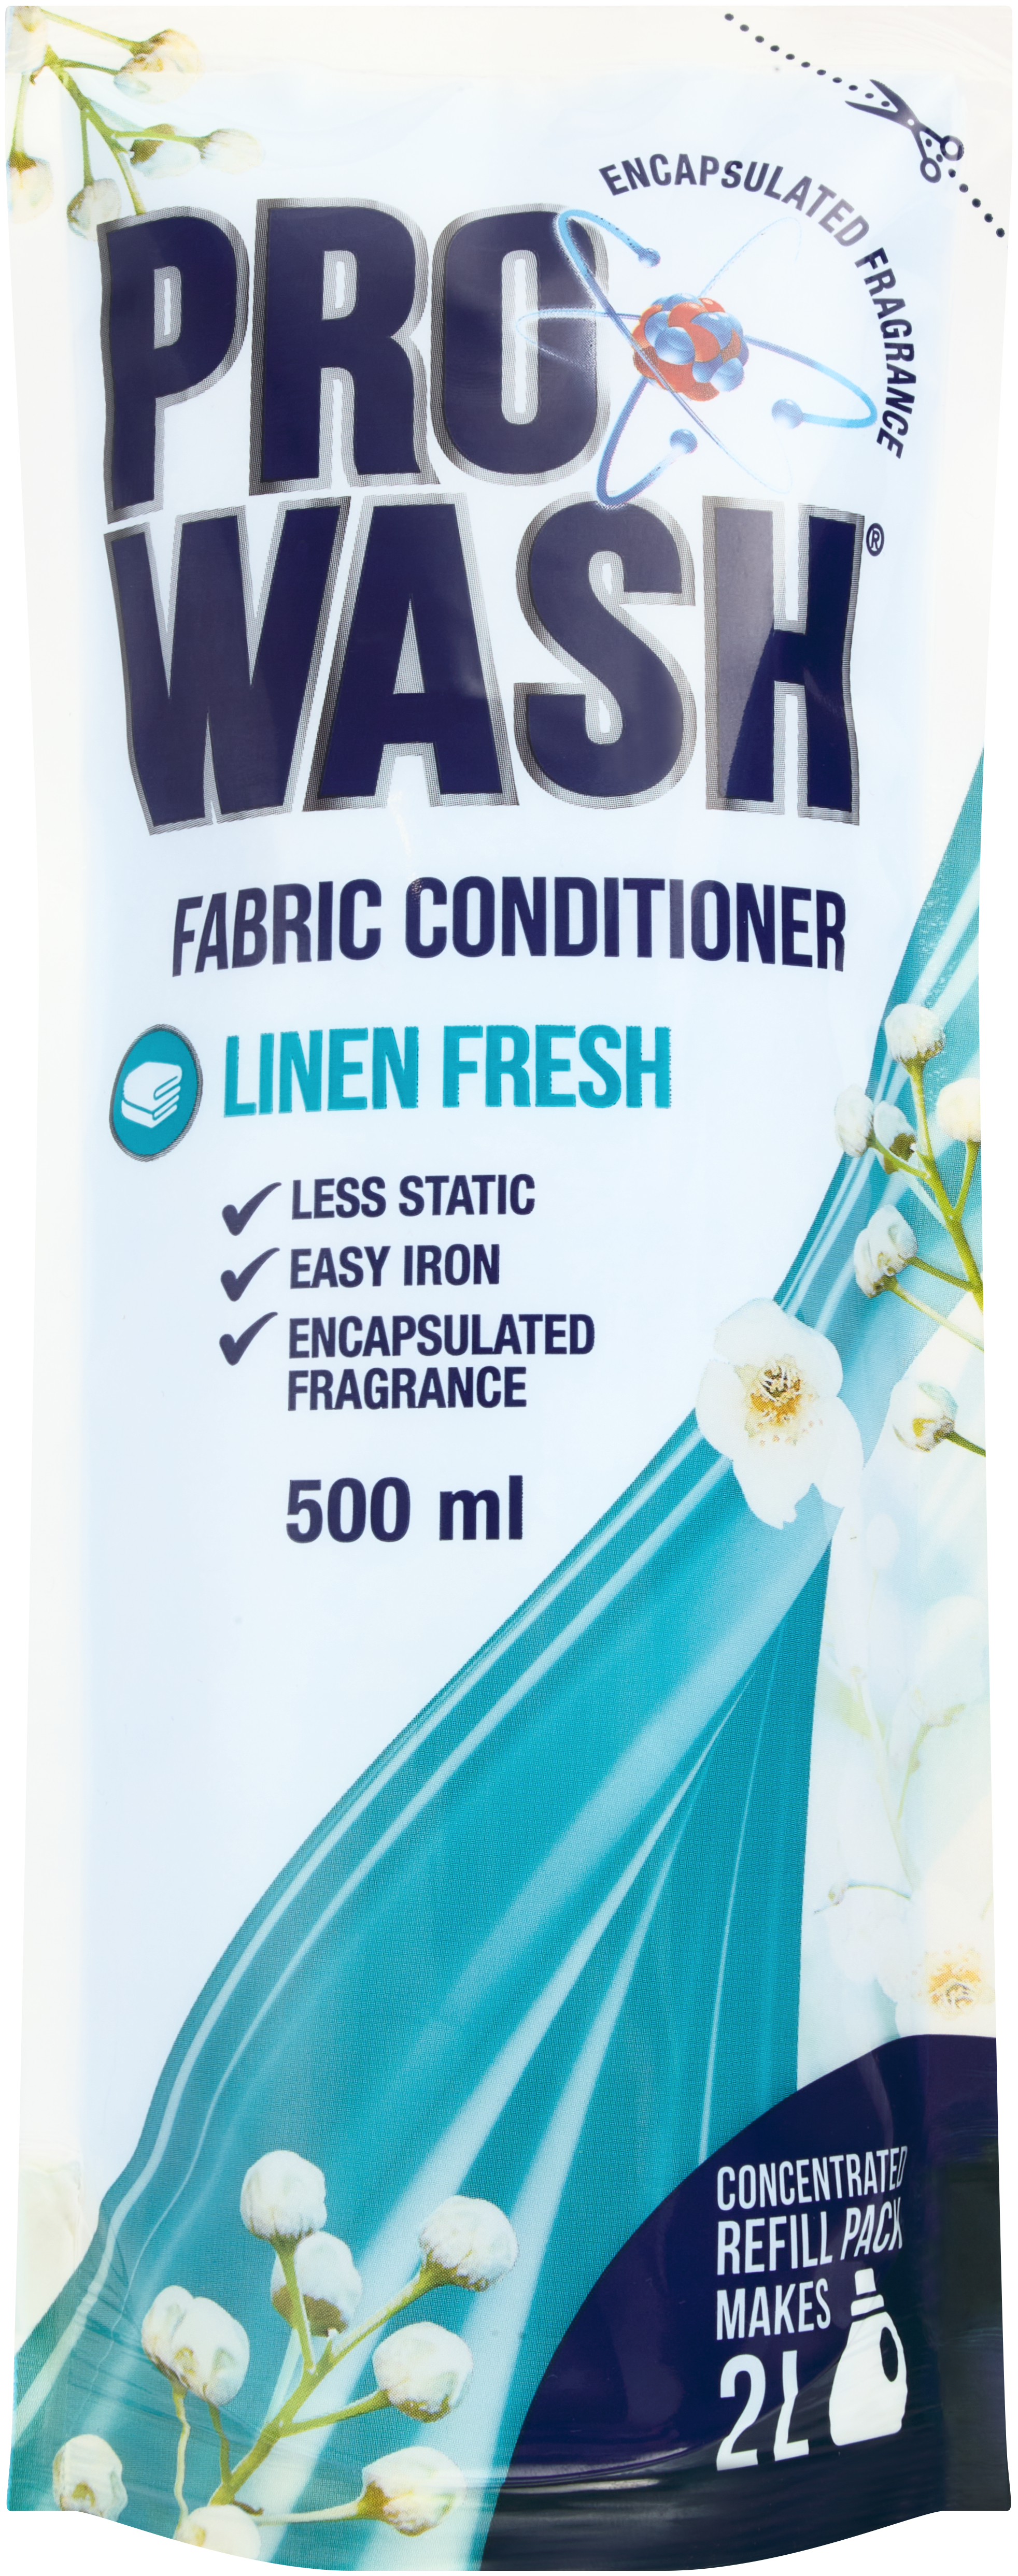 prowash fabric softener linen fresh